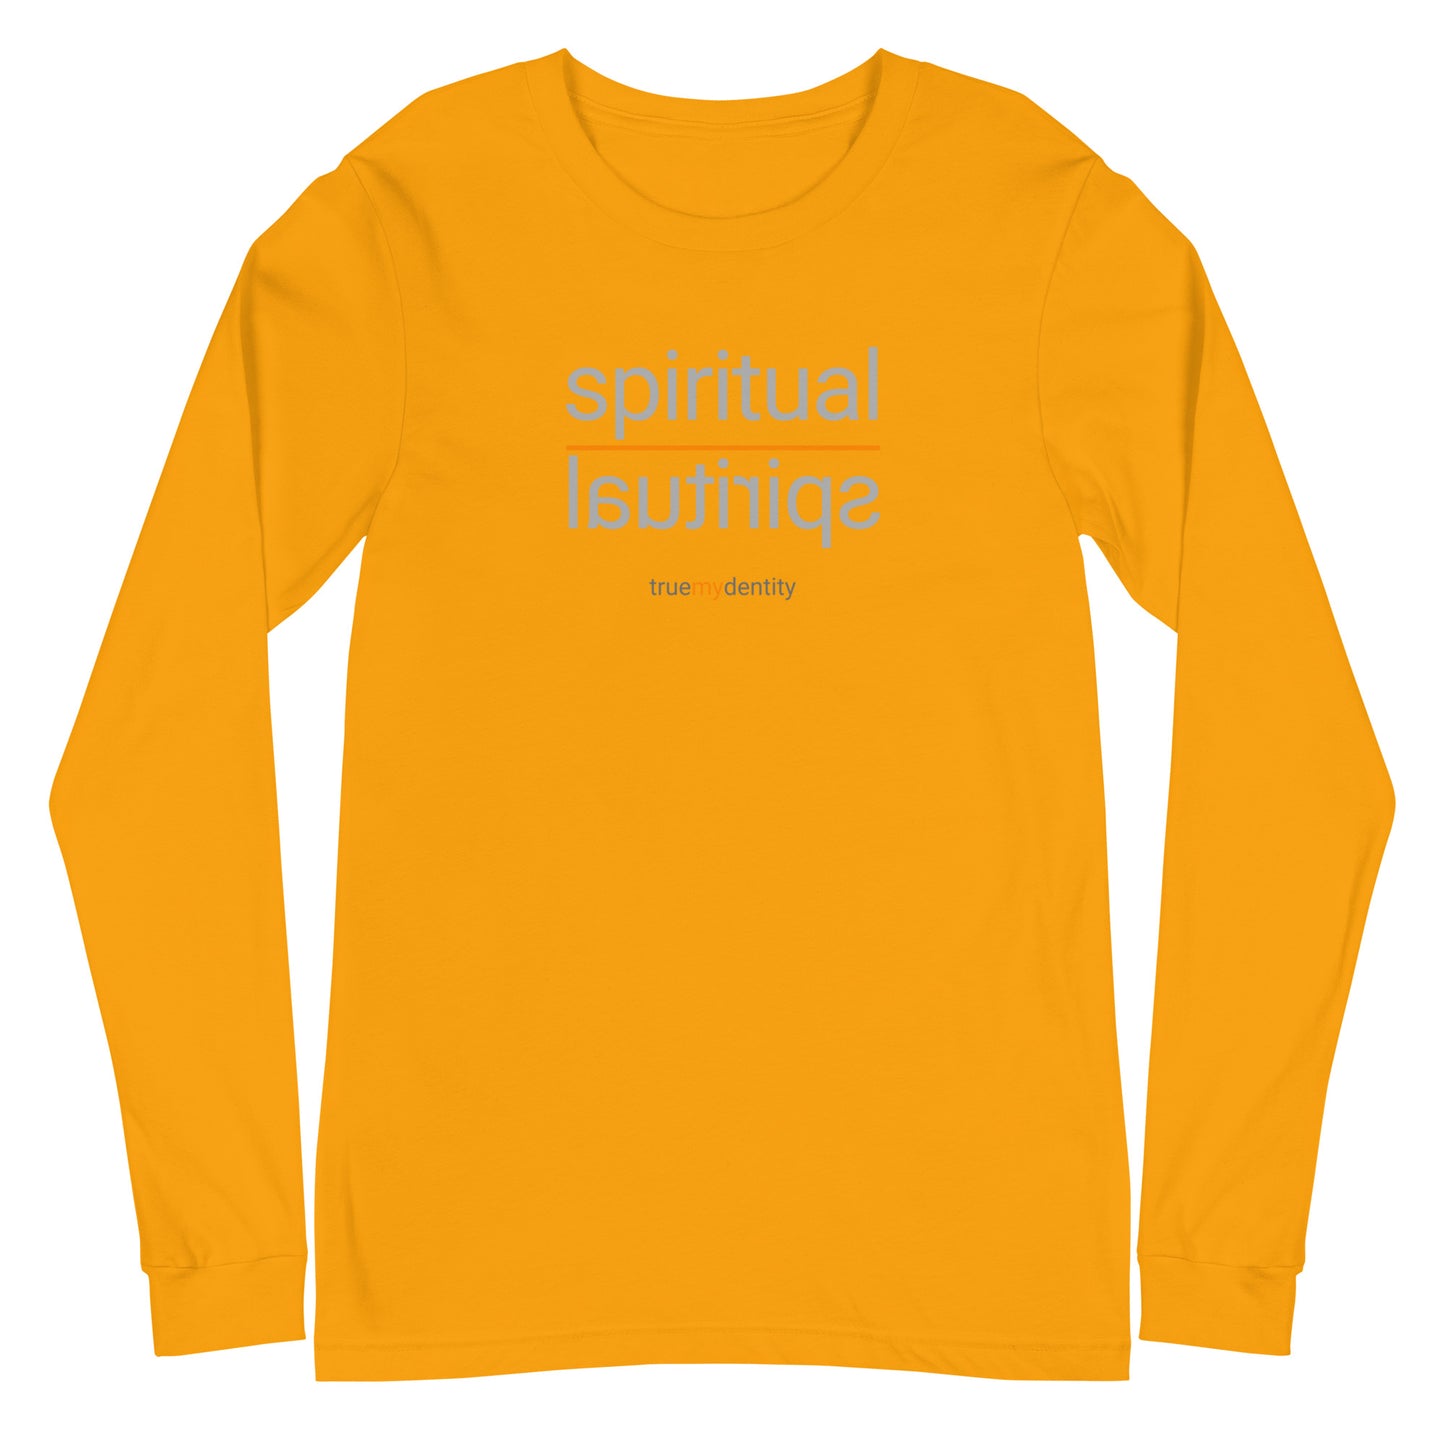 SPIRITUAL Long Sleeve Shirt Reflection Design | Unisex